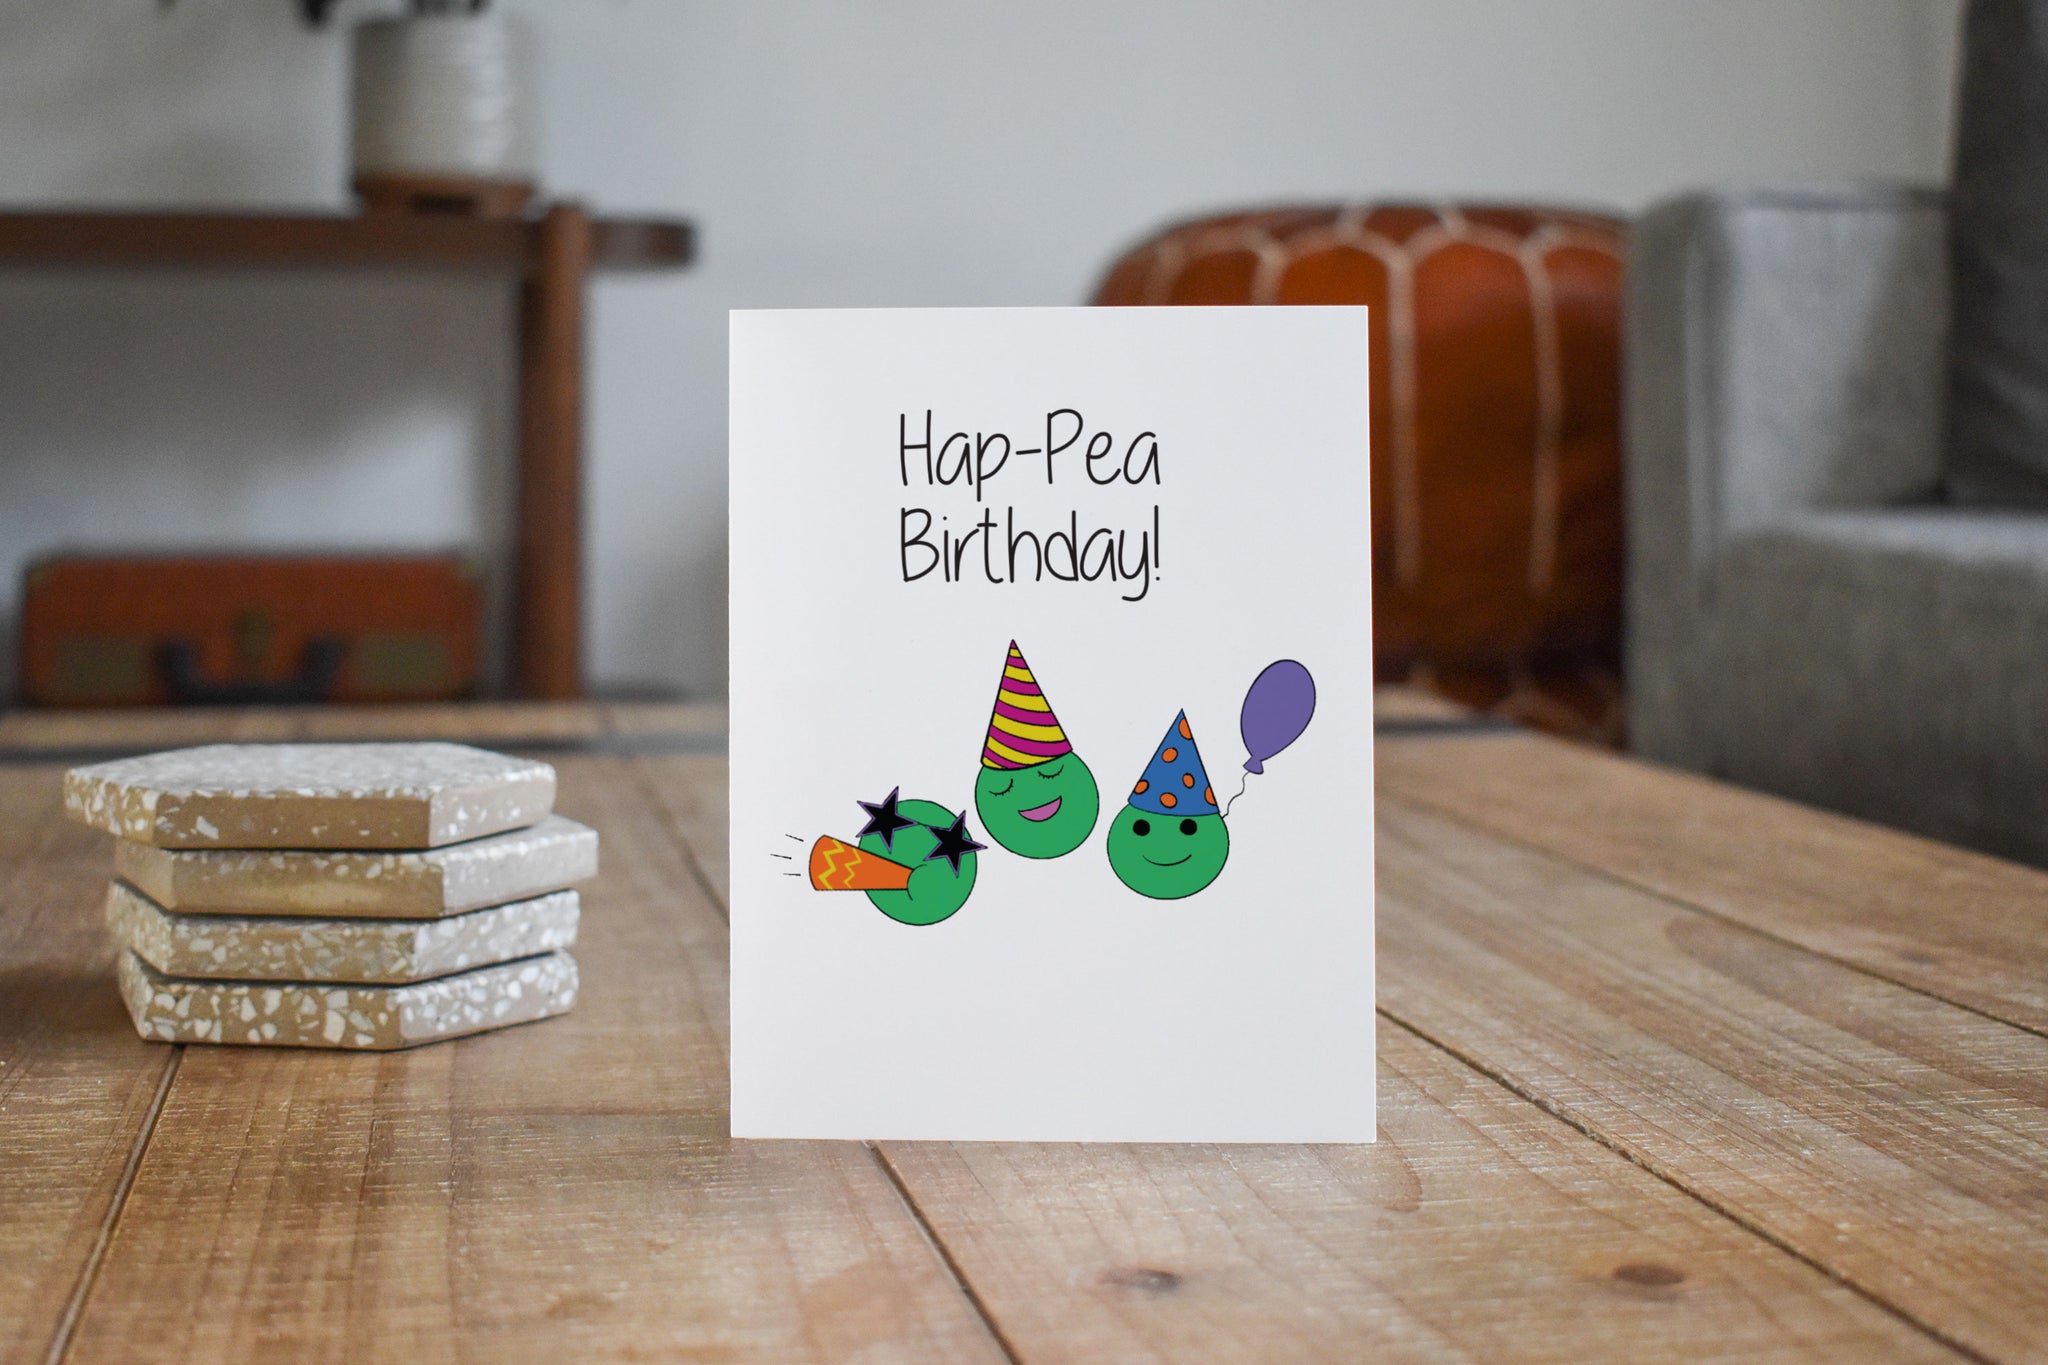 Hap-Pea Birthday, Happy Birthday Card